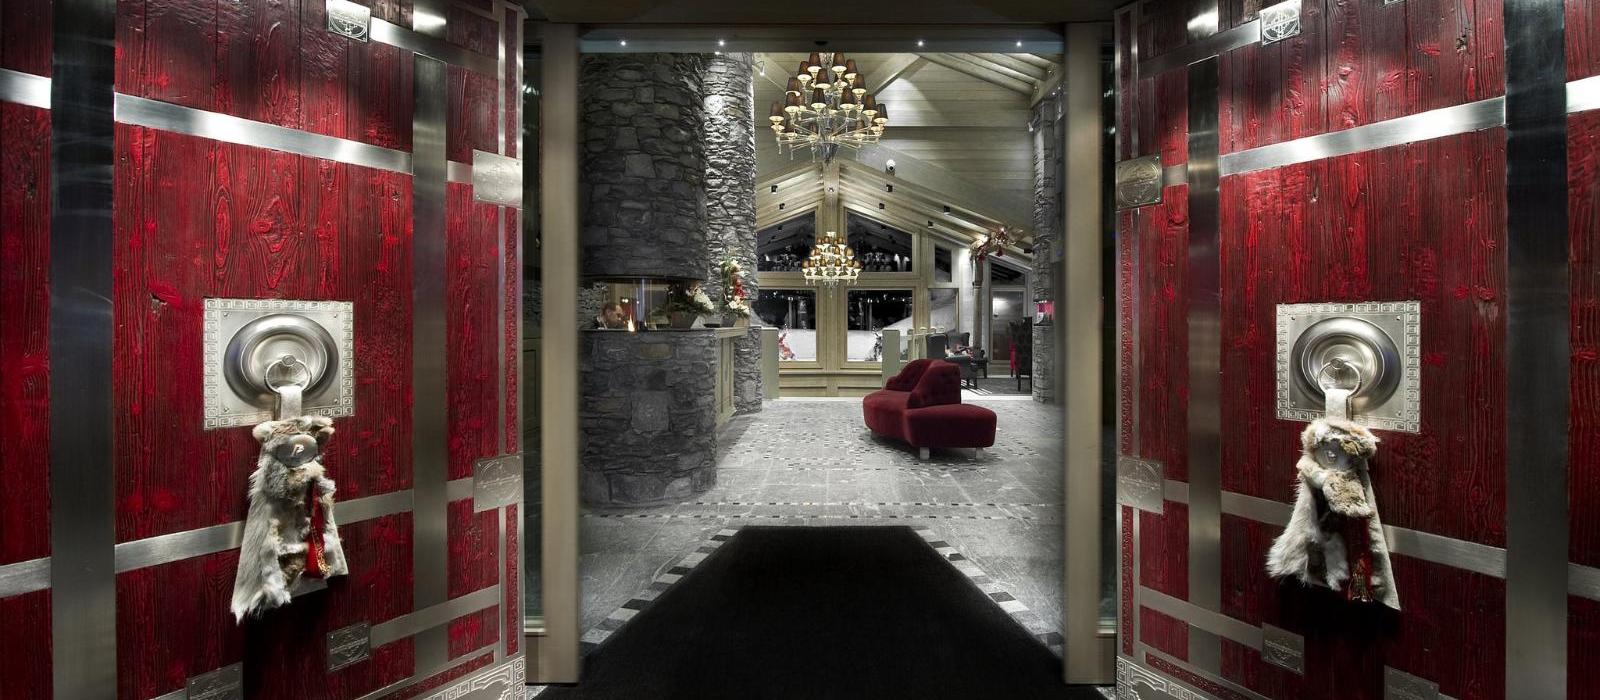 雪山乐途精品酒店(Hotel Le K2 Palace) 图片  www.lhw.cn